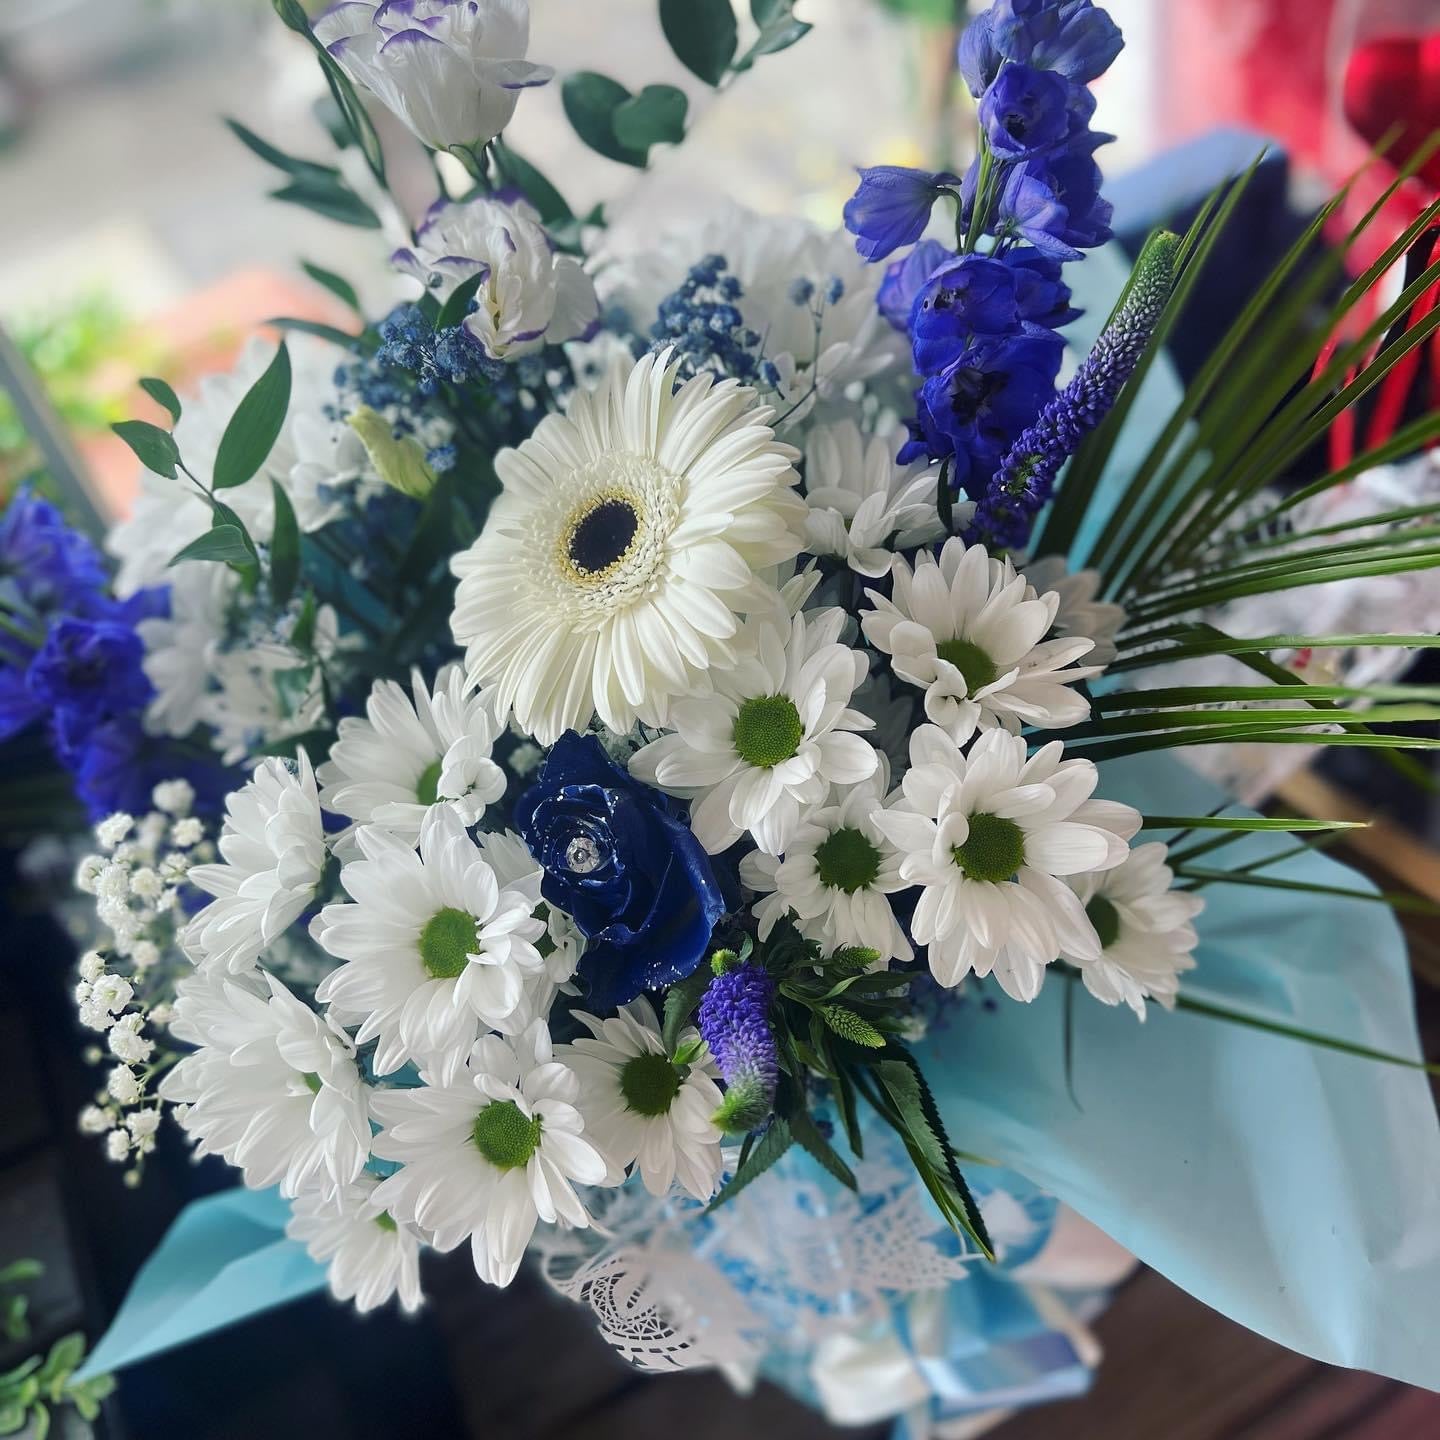 Mixed Flower Bouquet - Blue and White Flower Arrangements – Cherry Blossom